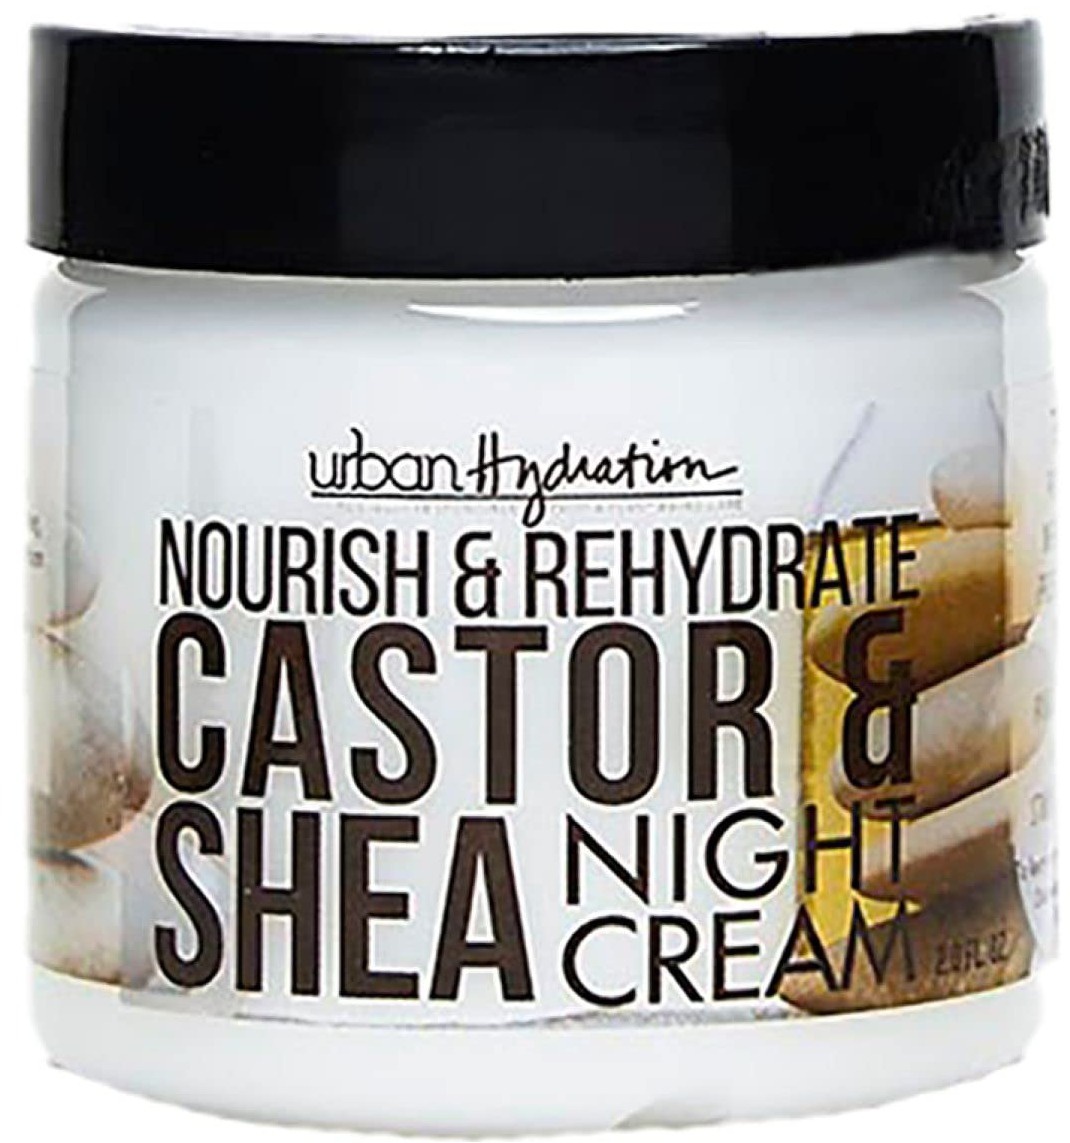 Urban Hydration Nourish & Rehydrate Castor & Shea Night Cream